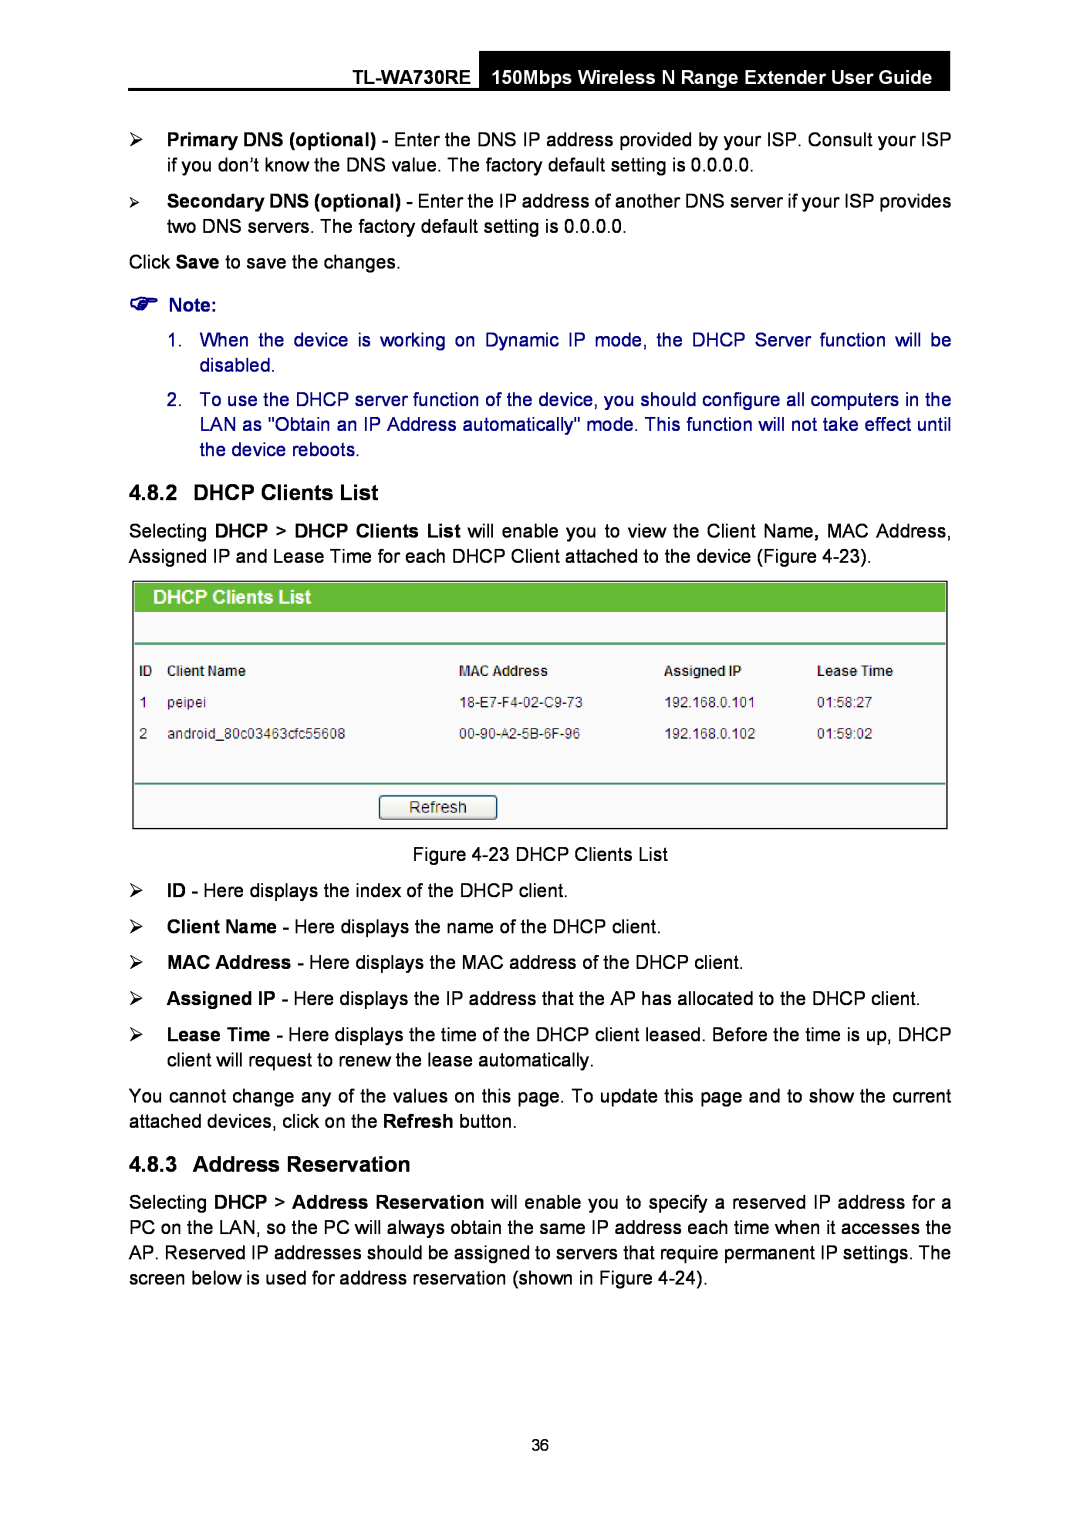 TP-Link TL-WA730RE manual DHCP Clients List, Address Reservation, 150Mbps Wireless N Range Extender User Guide 